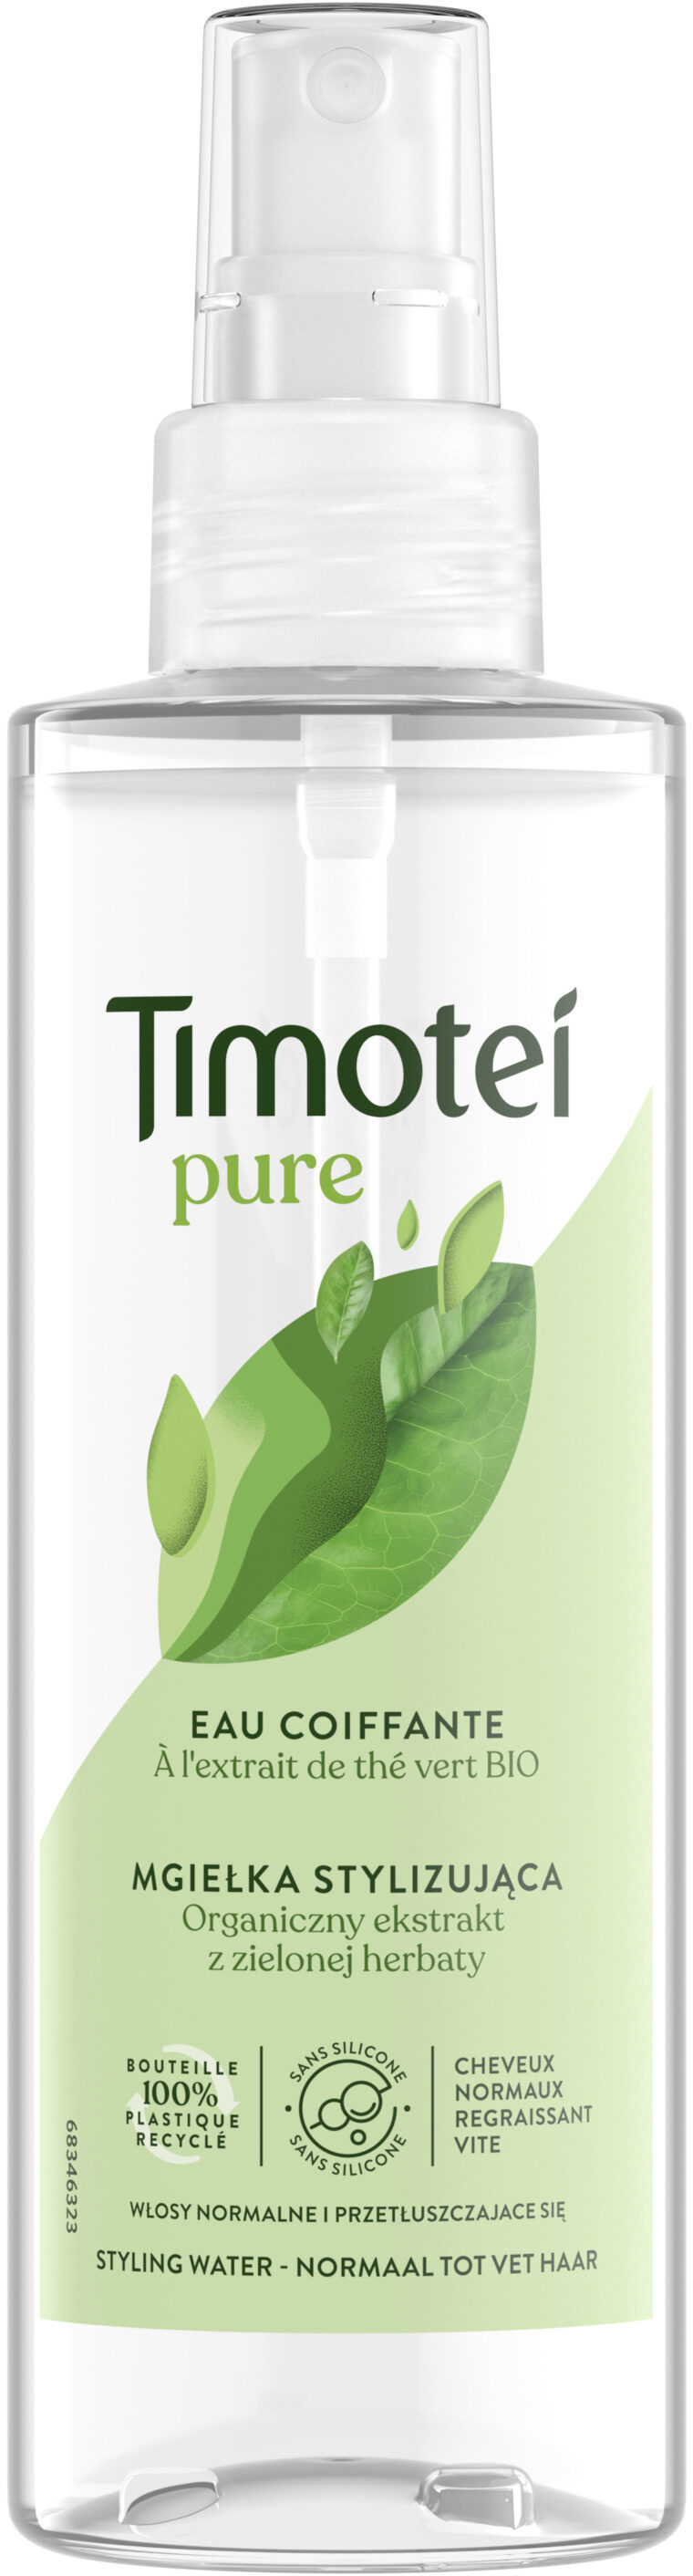 Timotei Eau Coiffante Pure 150ml - Product - fr